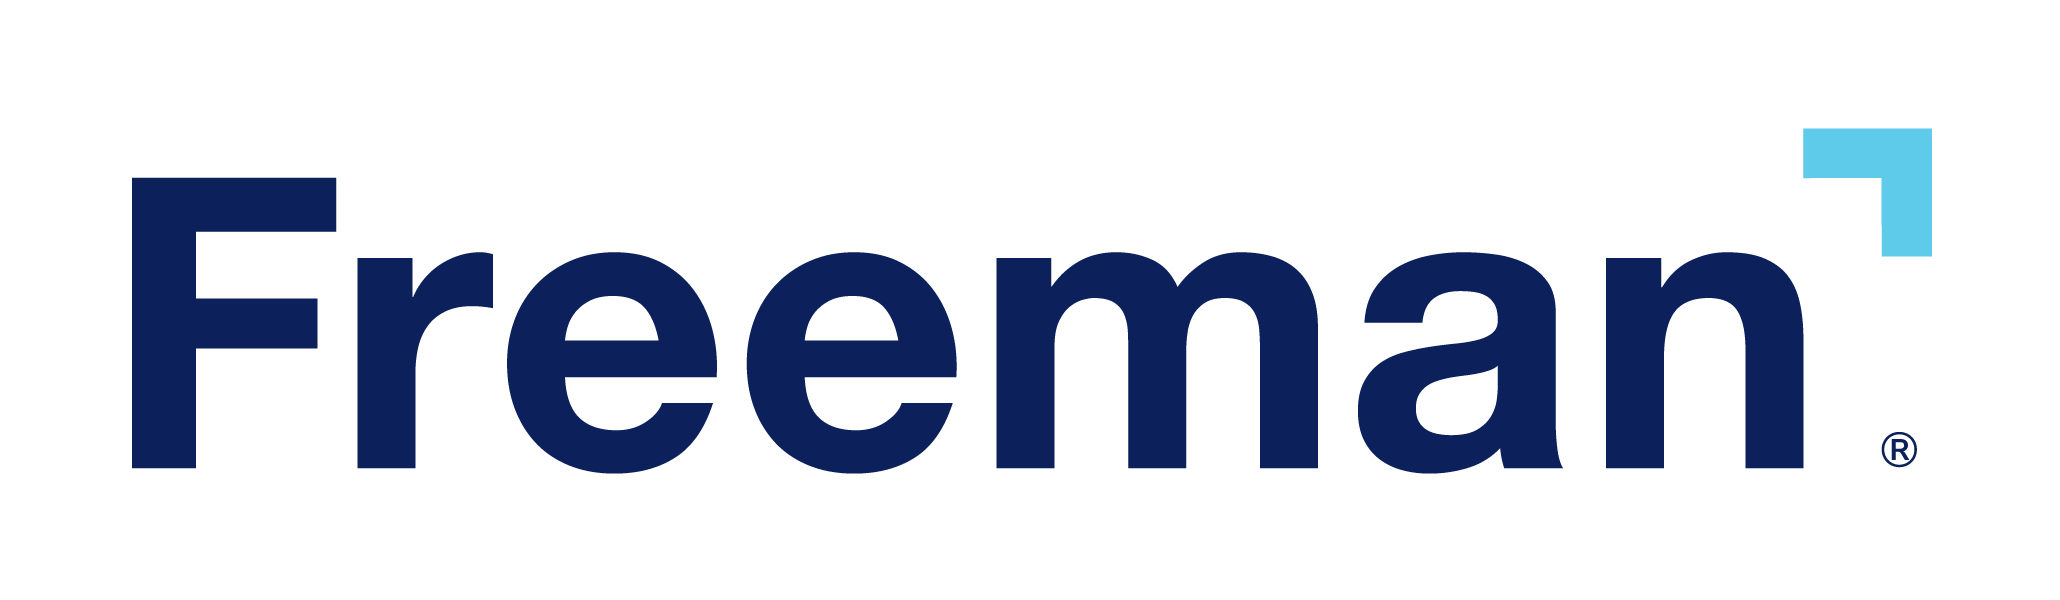 Freeman-logo_primary-standard_CMYK.png